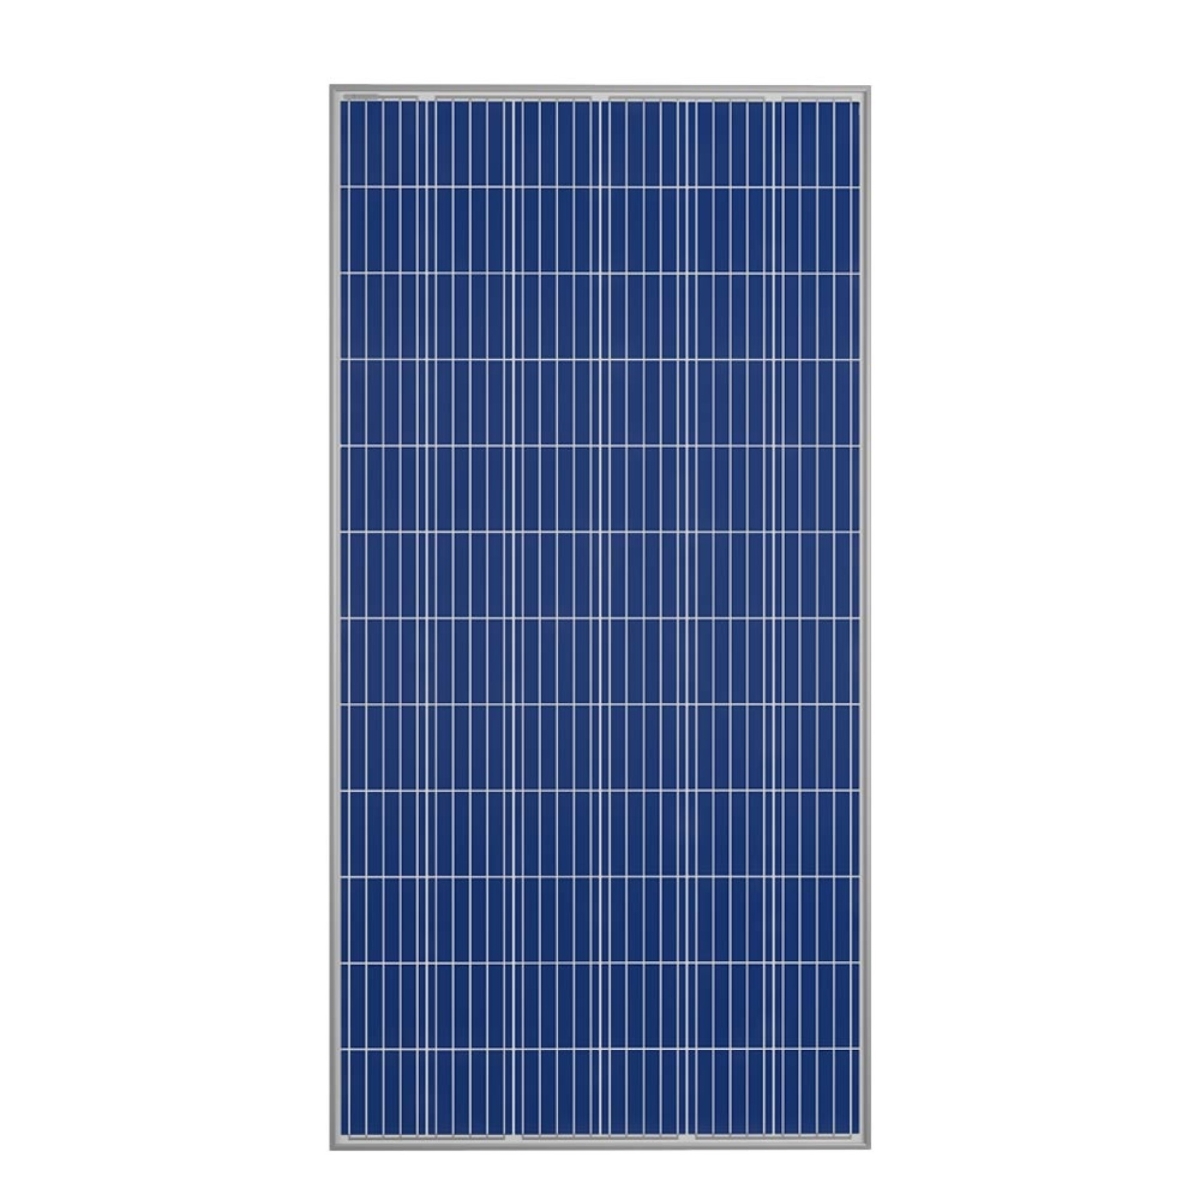 TommaTech 330 Watt 72 Polycrystalline Solar Panel